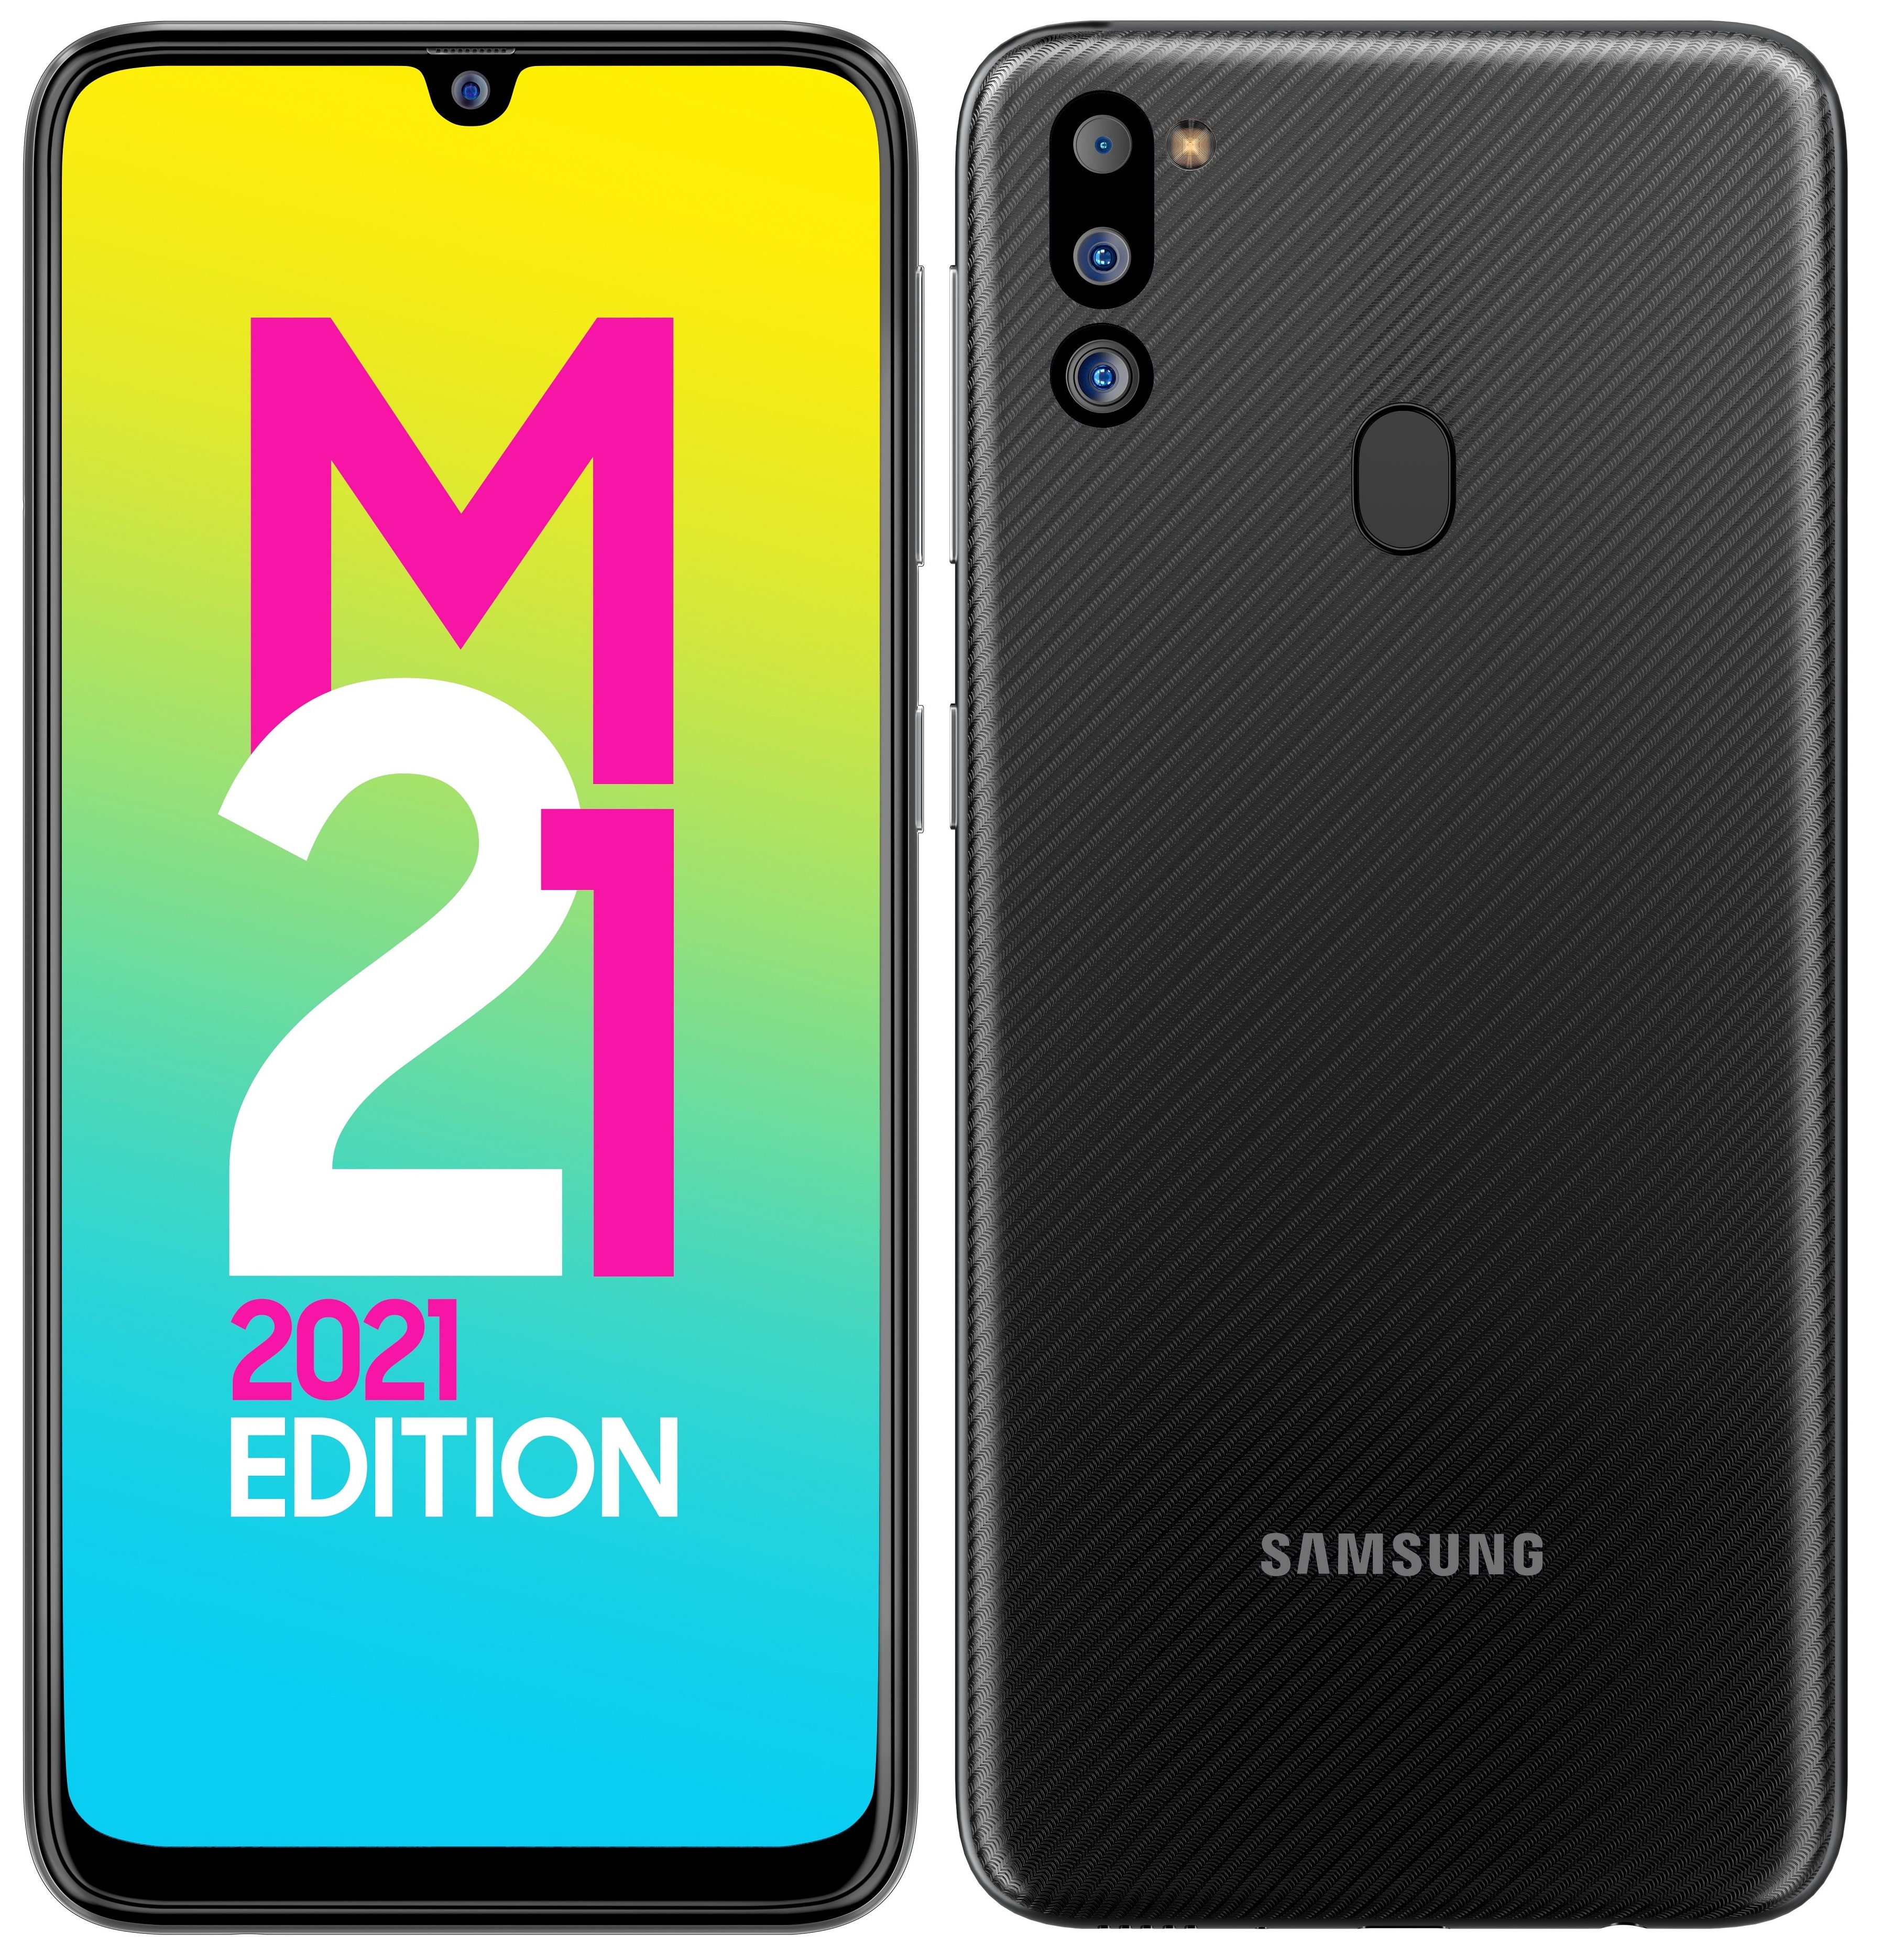 Галакси м 21. Смартфон Samsung Galaxy m21. Galaxy m21 2021. Samsung m21 Edition 2021. Самсунг м21 2022.